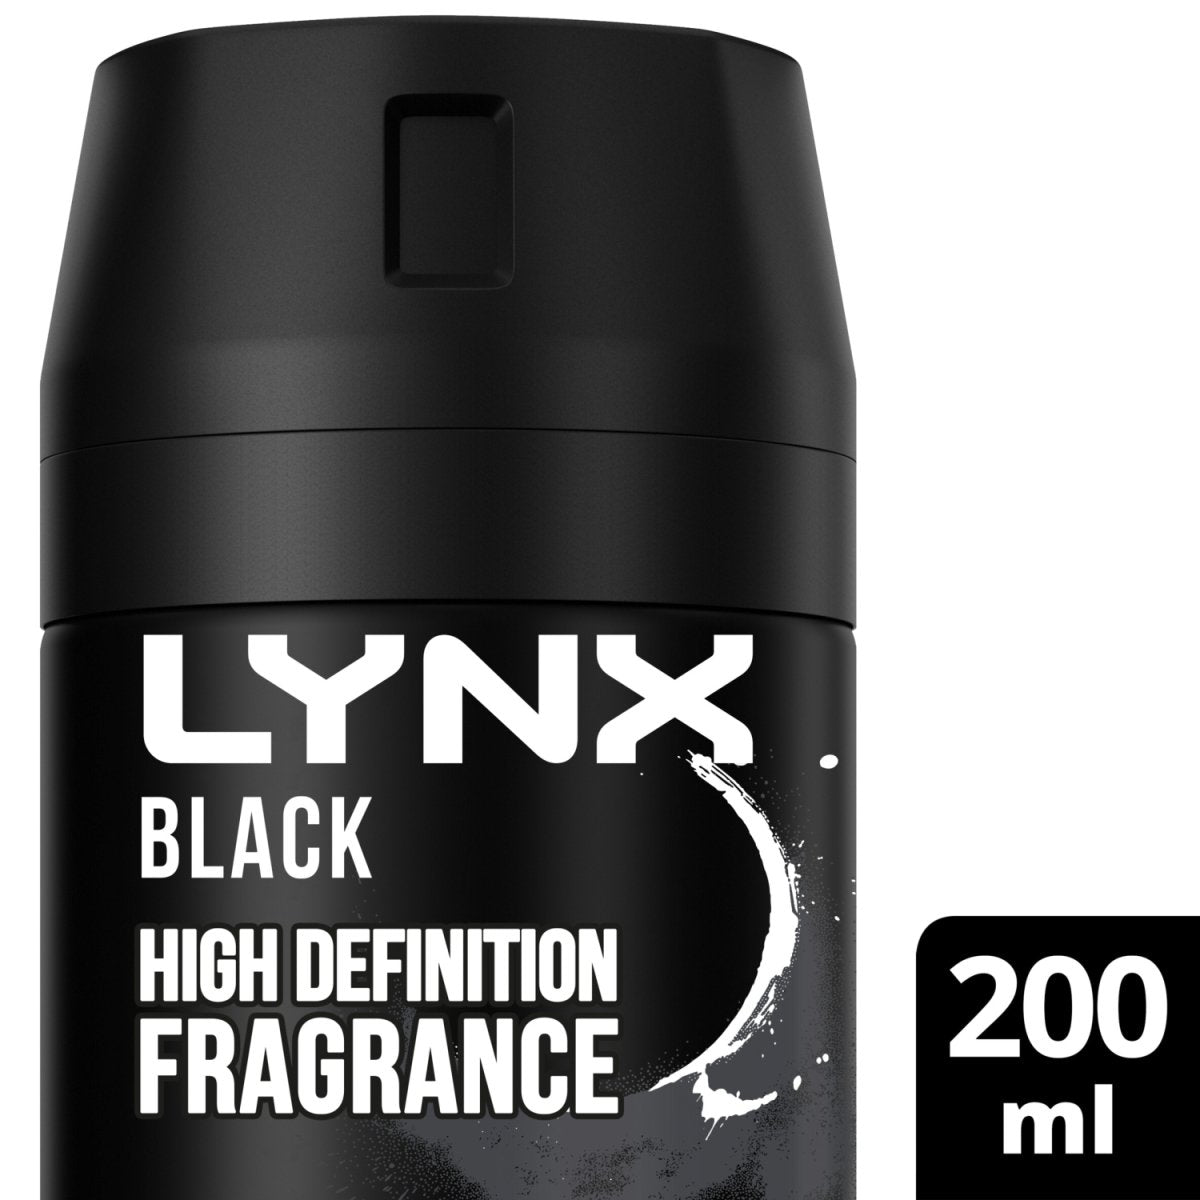 Lynx Bodyspray XL Black - Intamarque - Wholesale 8712561613842